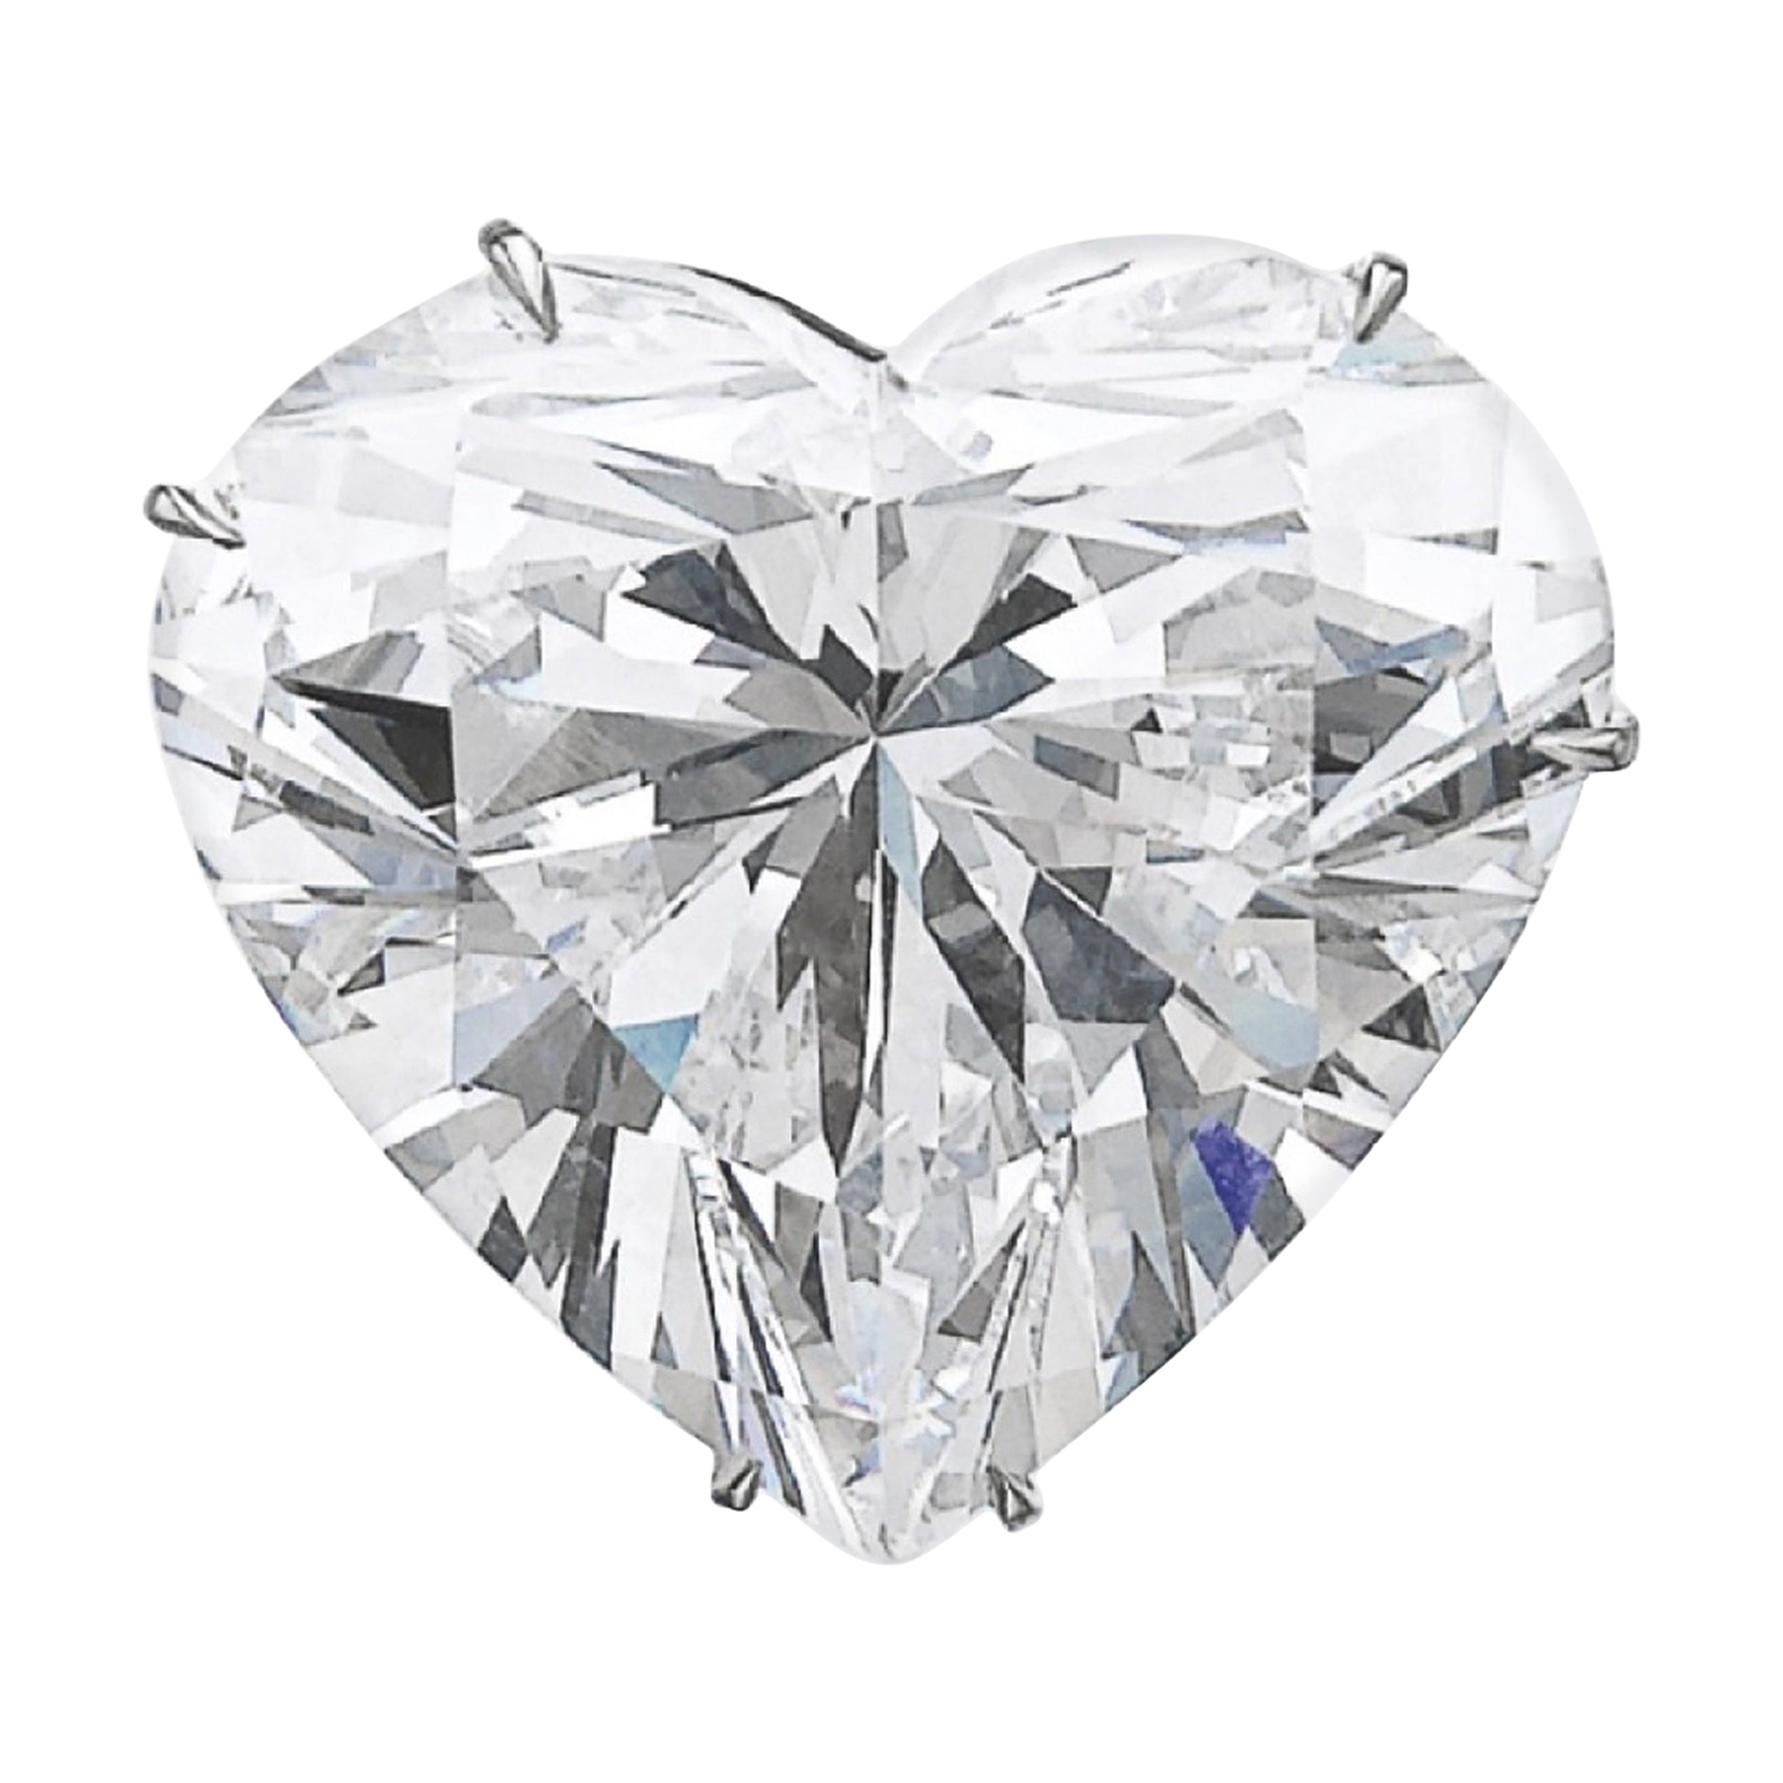 I FLAWLESS GIA Certified 3.20 Carat Heart-Cut Shape Diamond